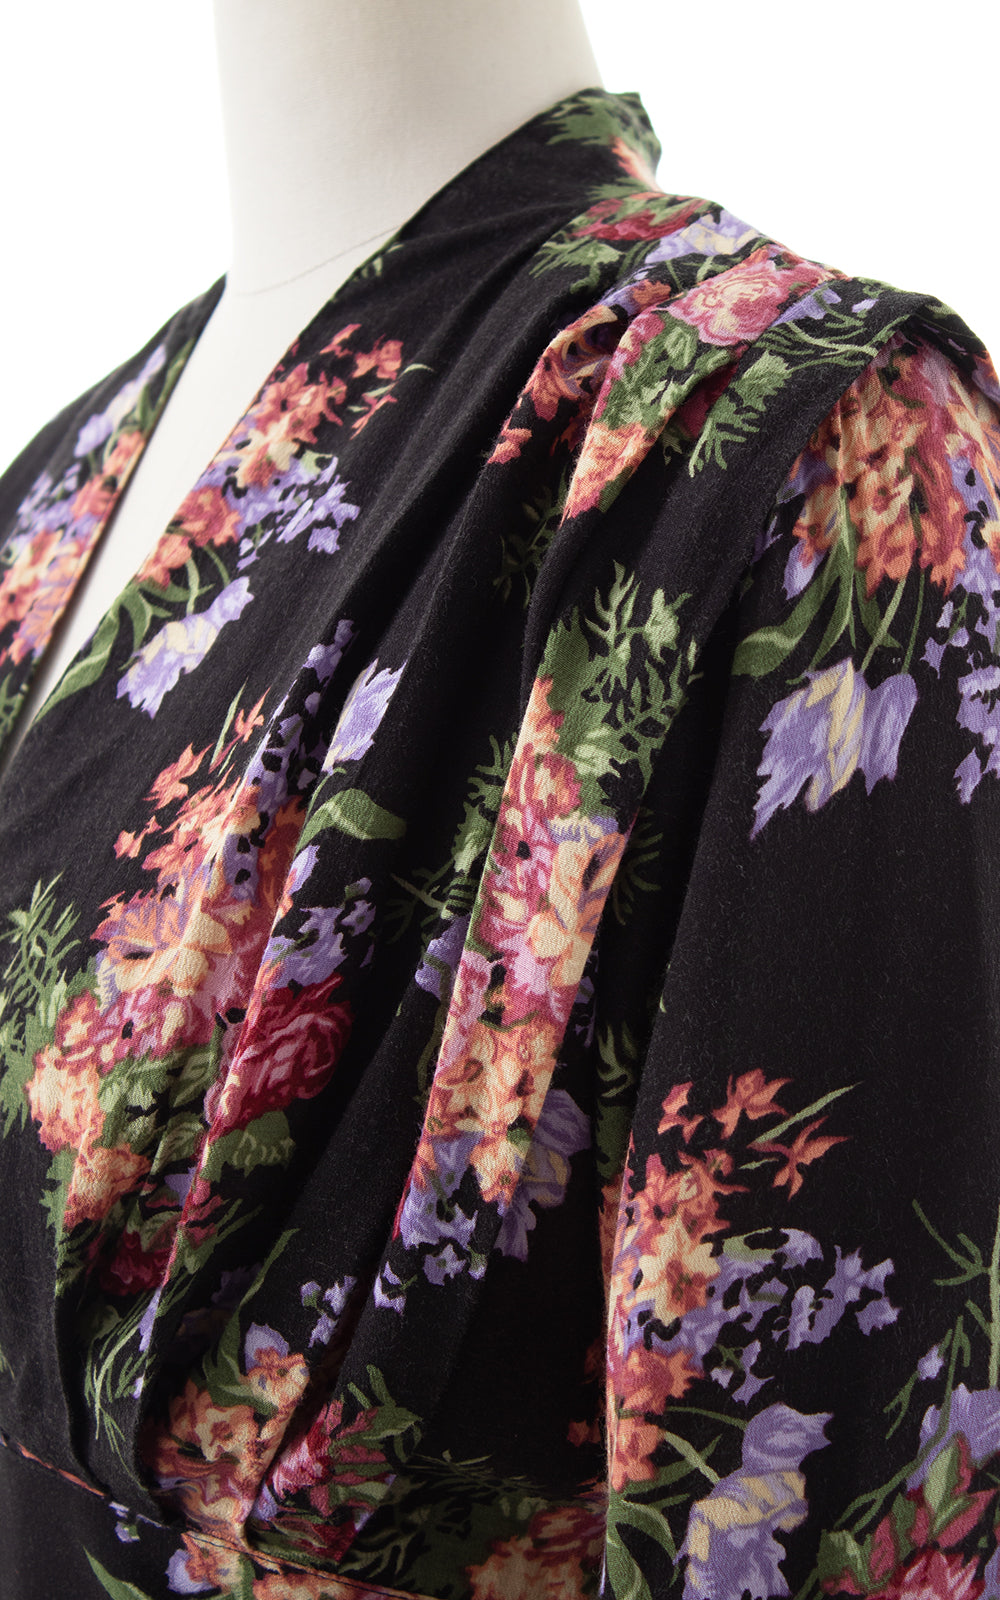 1980s Black Floral Dress with Pockets | medium/large